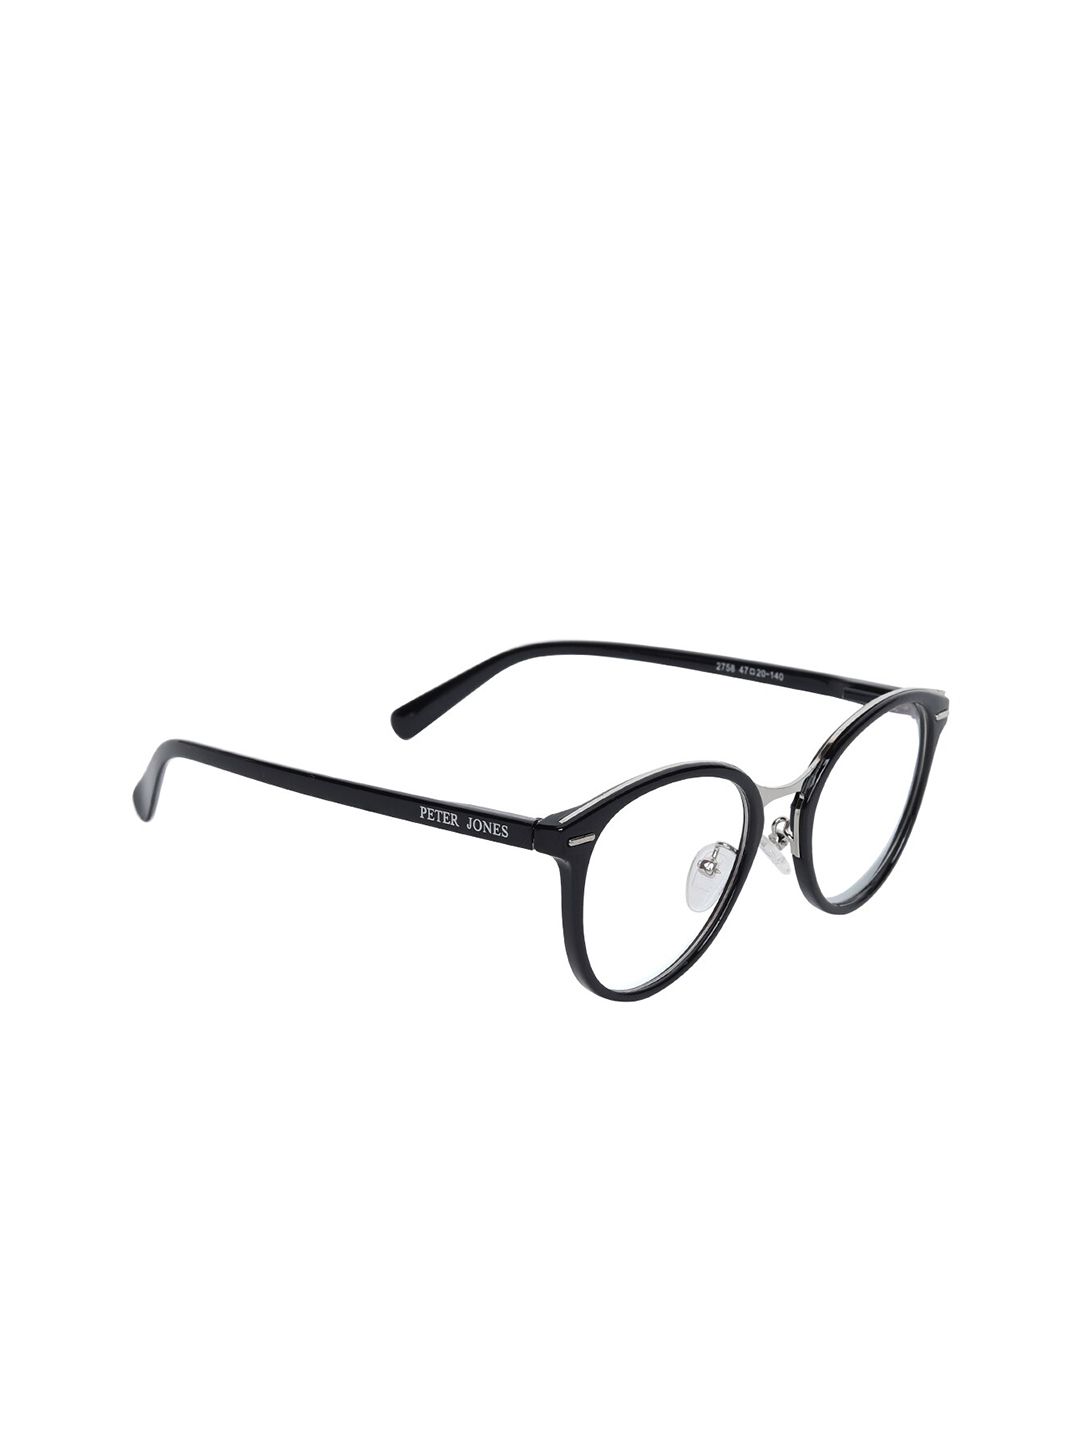 Peter Jones Eyewear Unisex Black & Silver-Toned Full Rim Cateye Frames Price in India